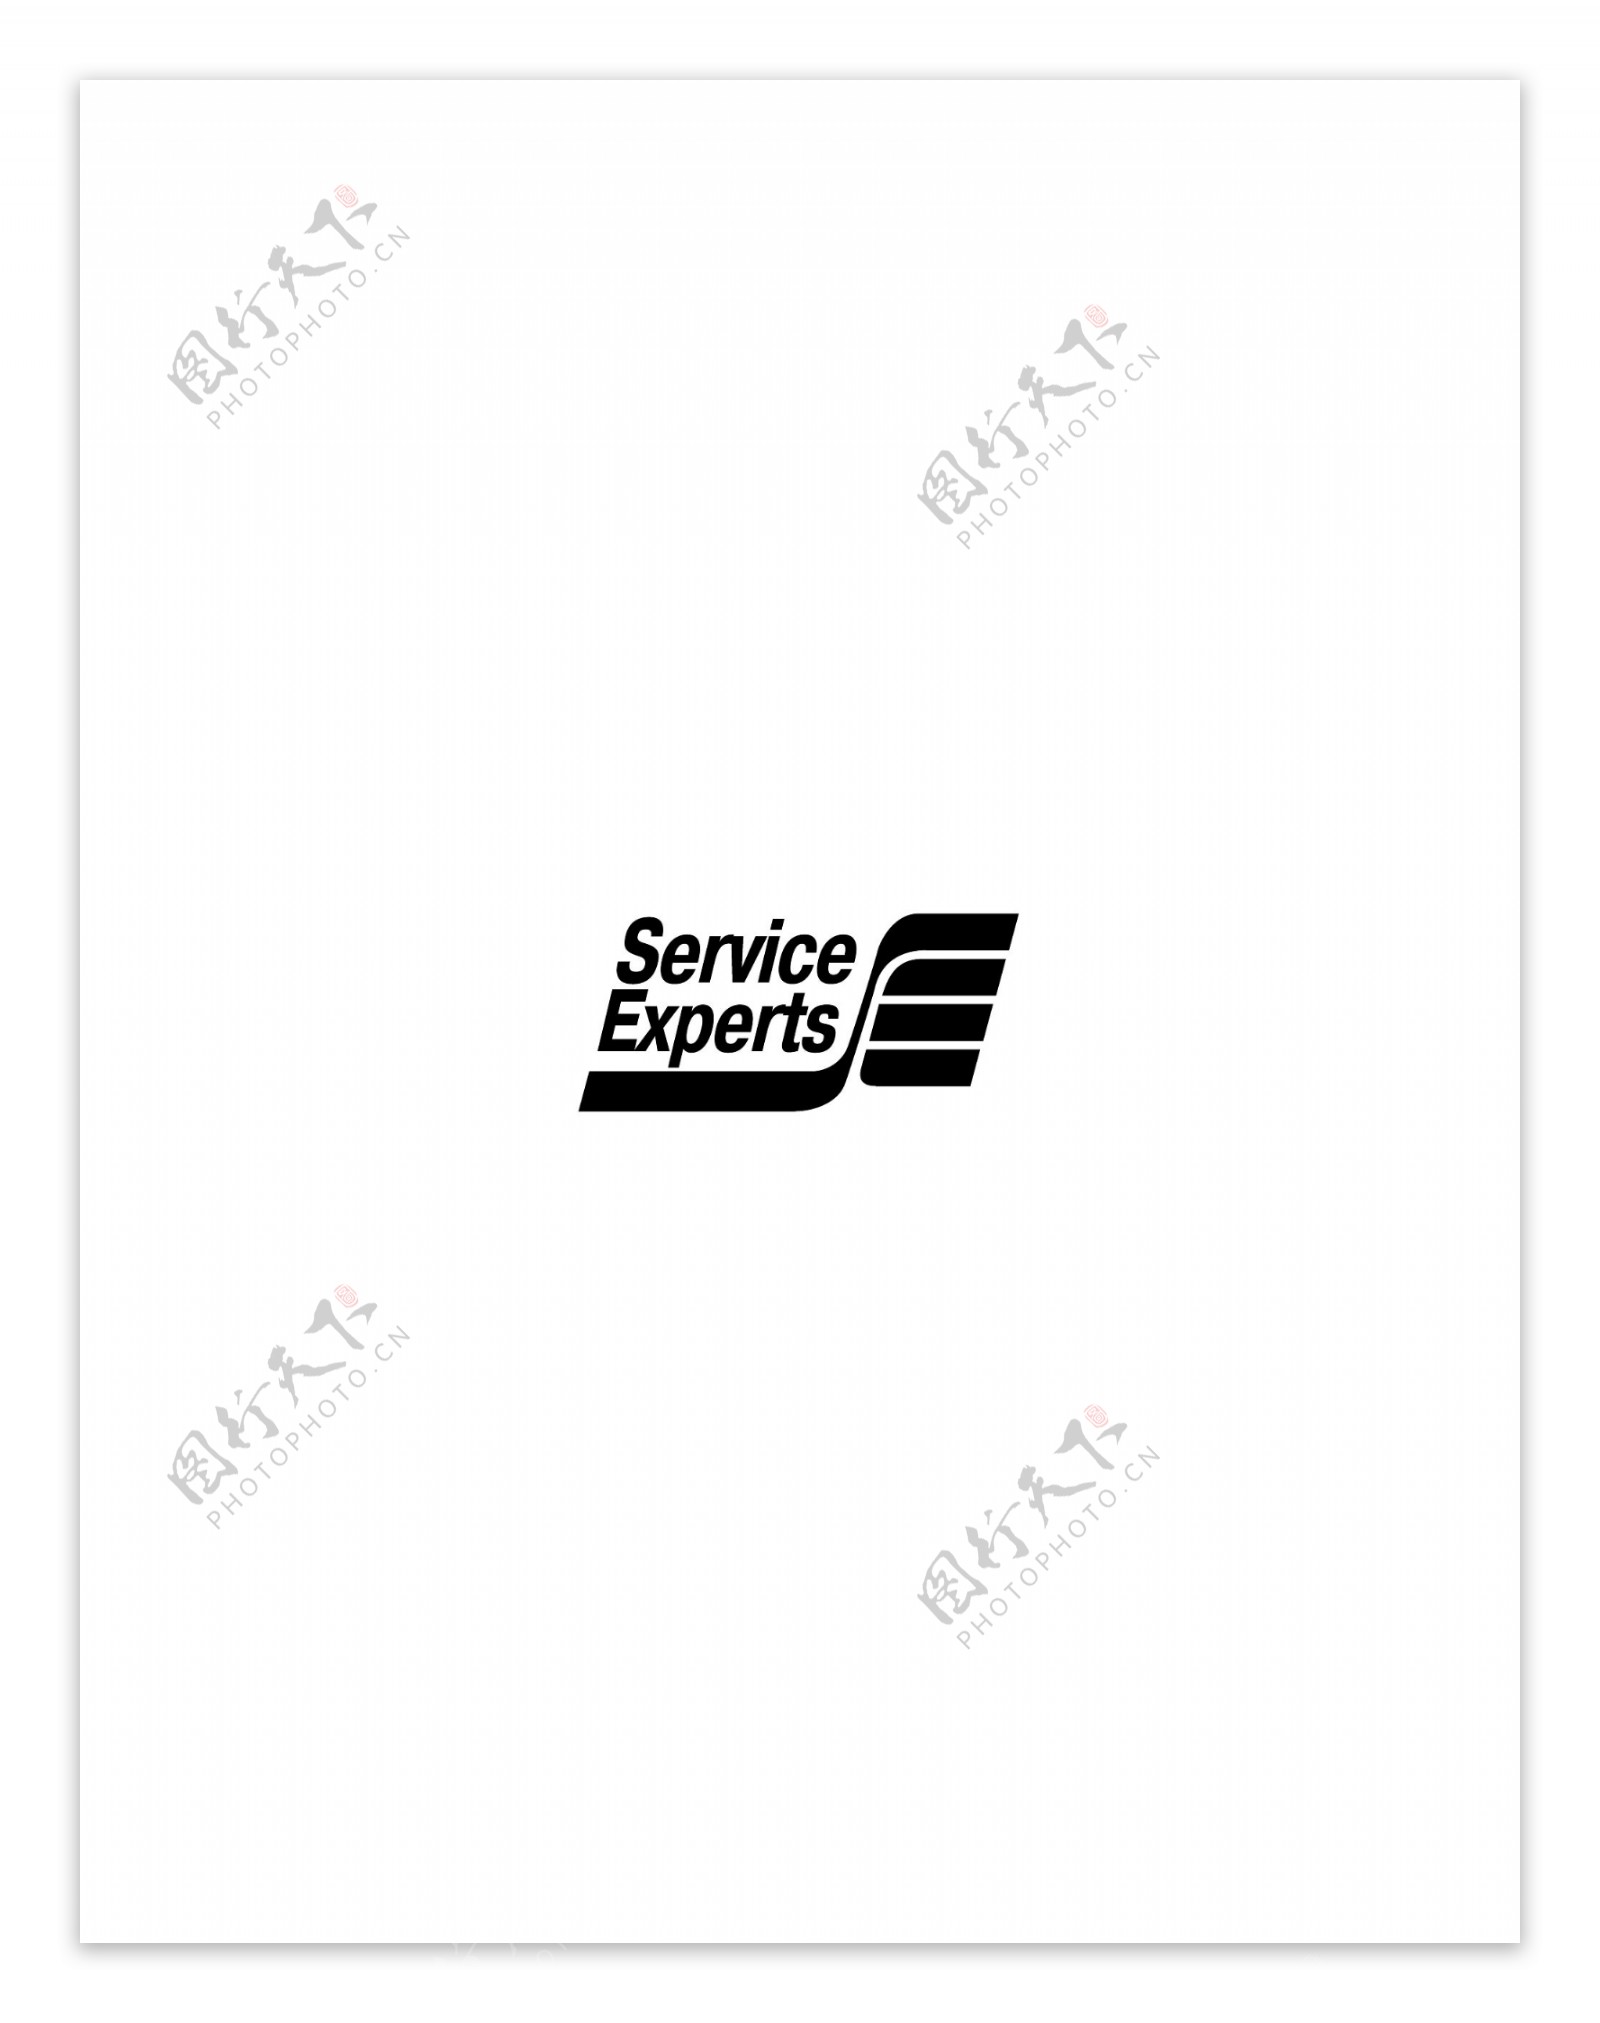 ServiceExpertslogo设计欣赏国外知名公司标志范例ServiceExperts下载标志设计欣赏